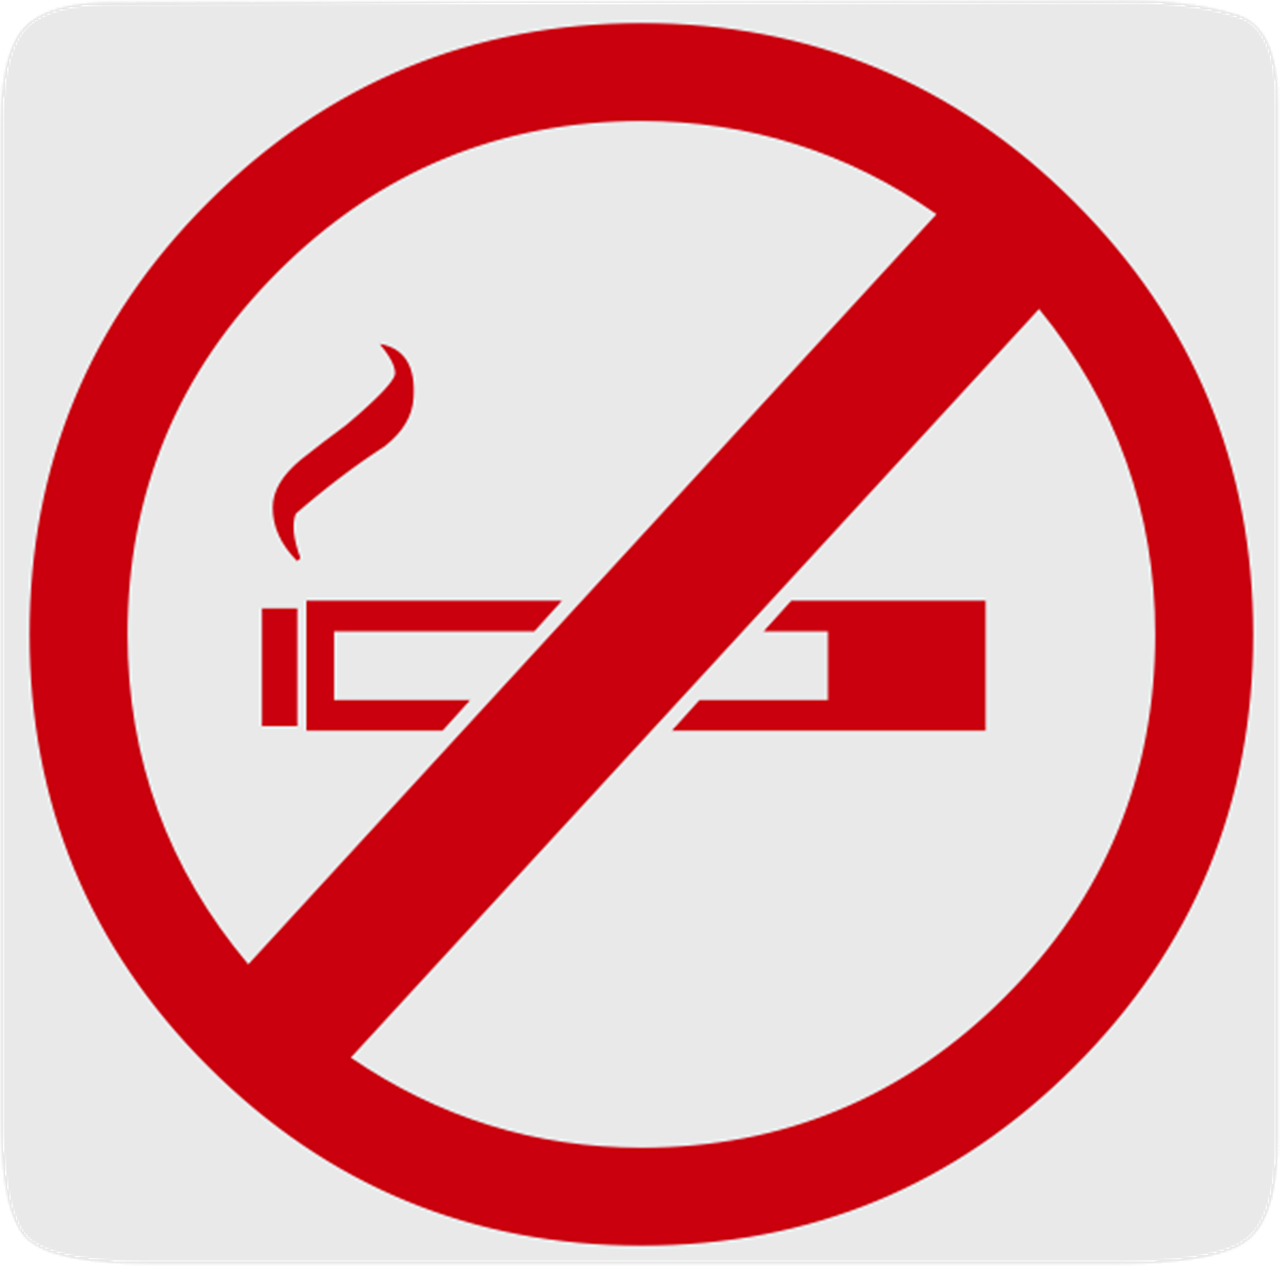 Not allowed speed. Курение запрещено. Значок курение запрещено. Знак «не курить». Пиктограмма не курить.